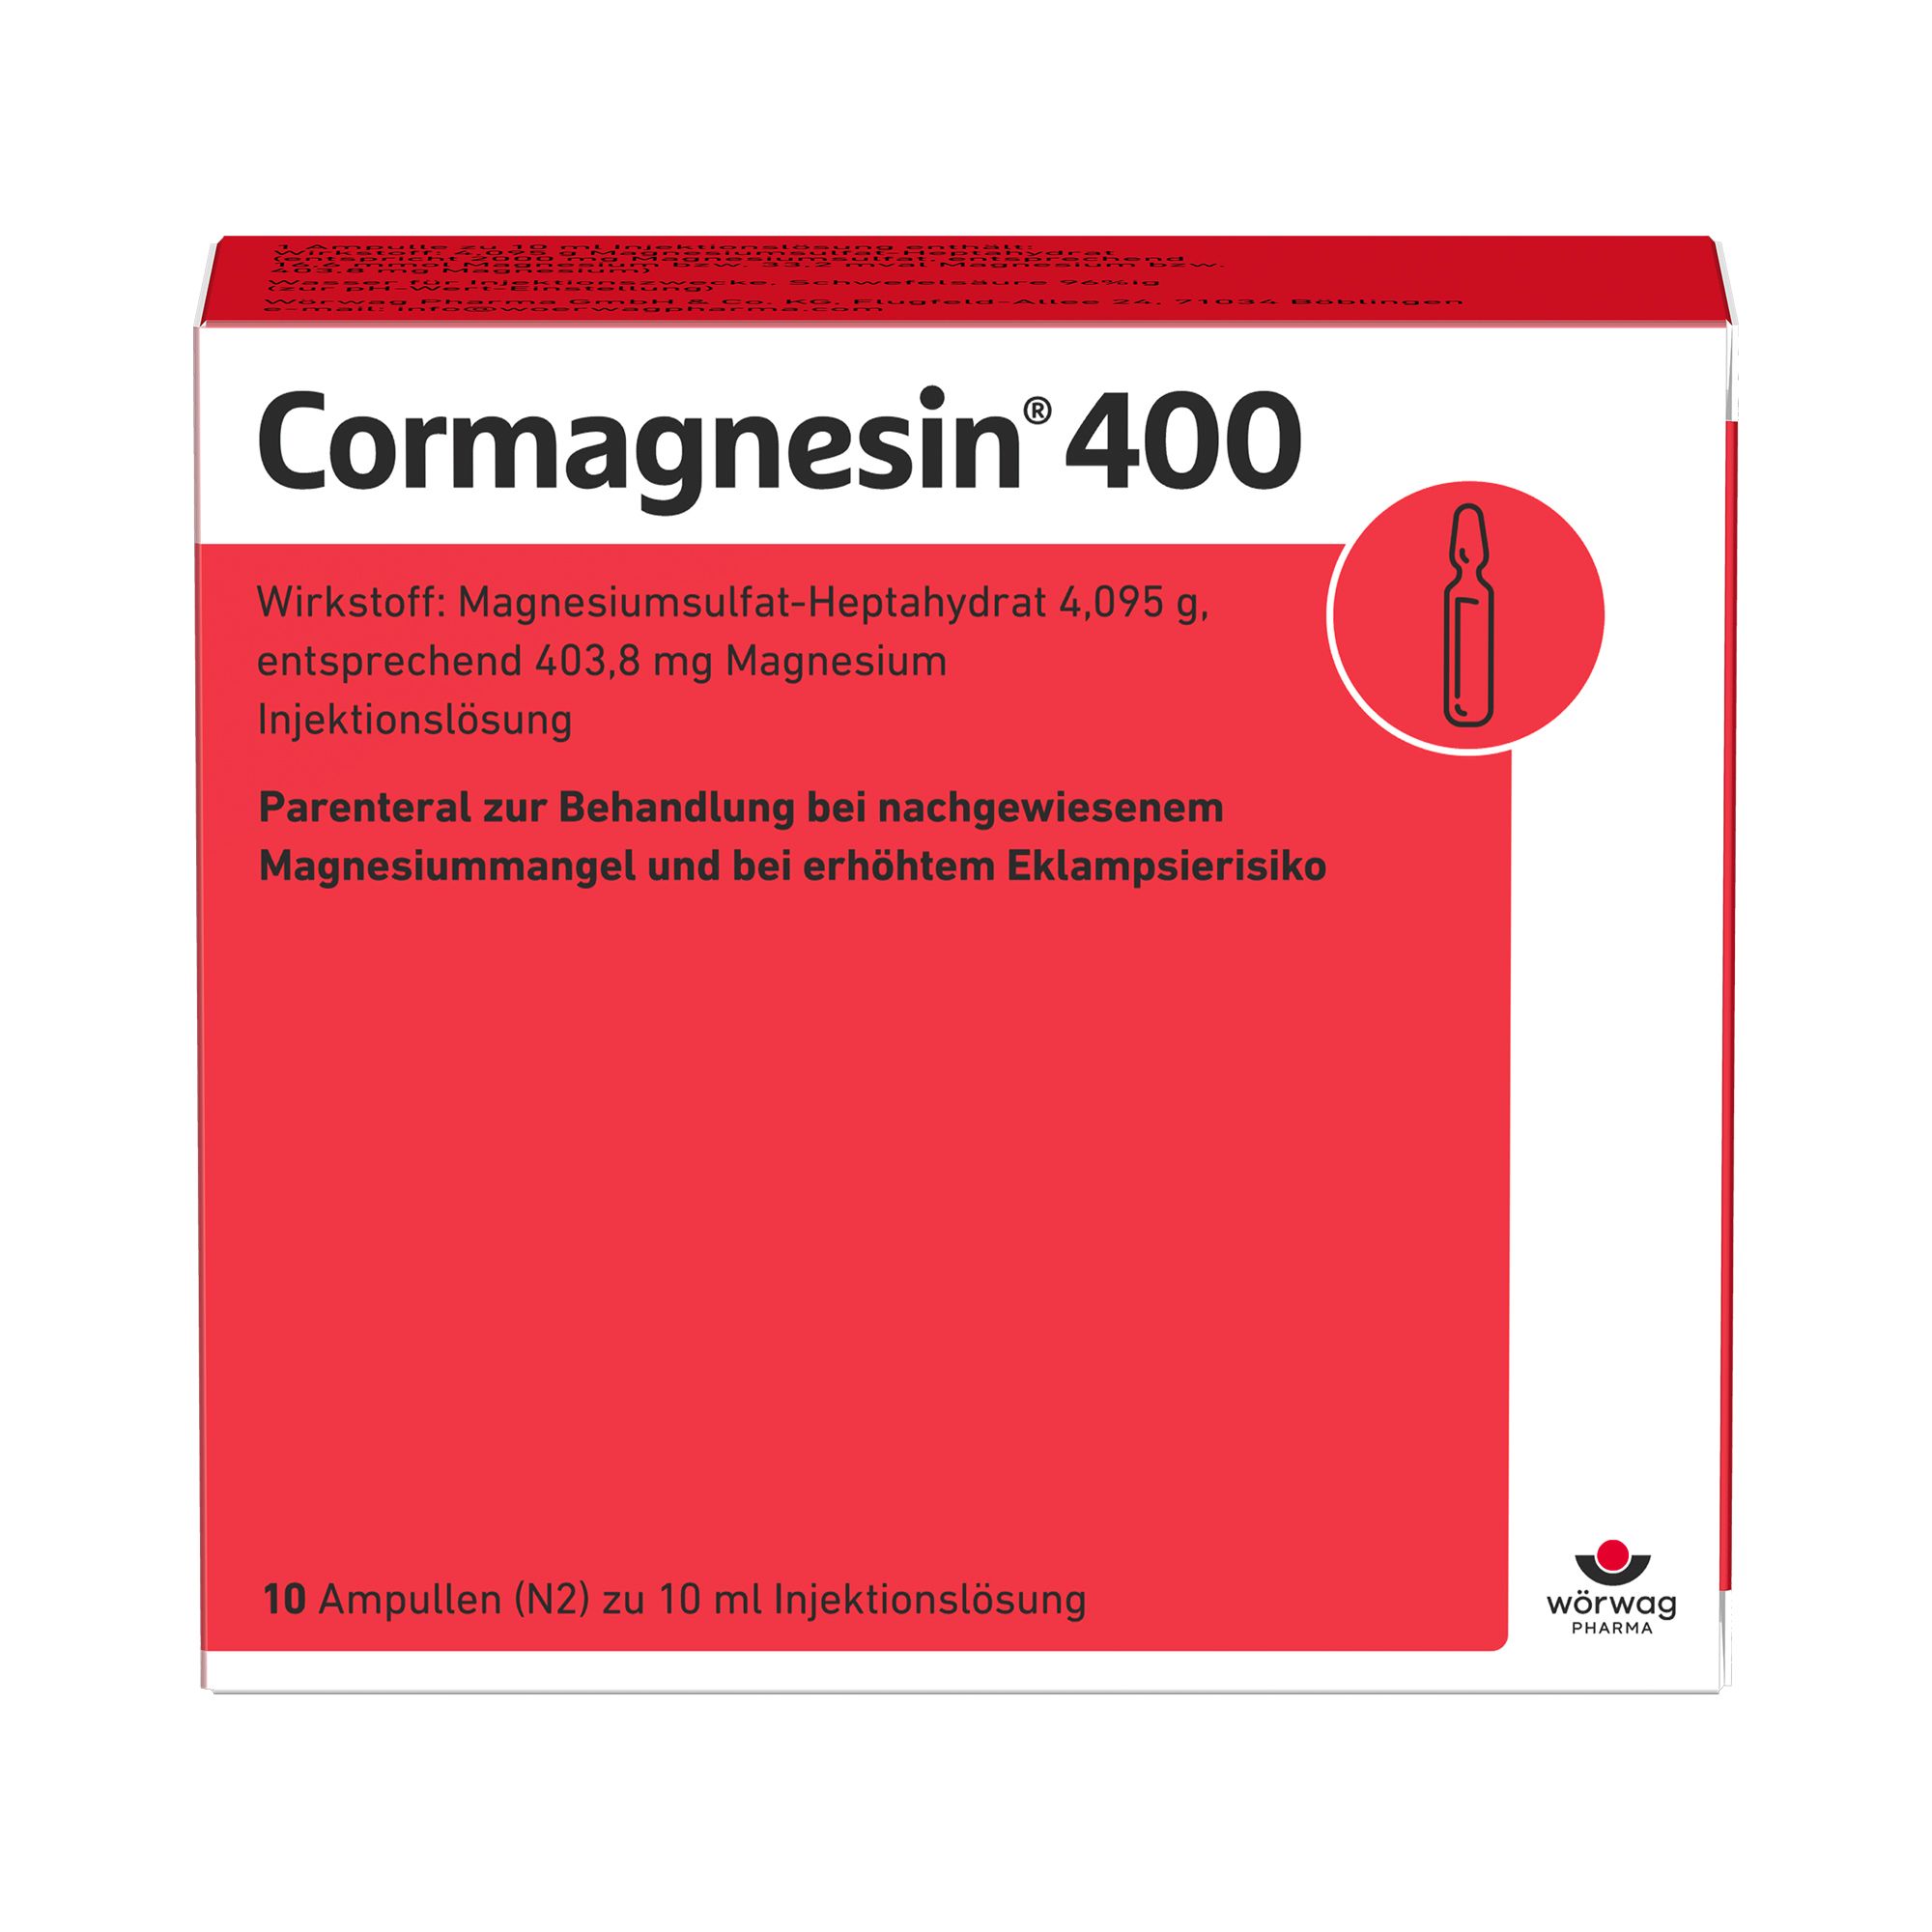 Cormagnesin® 400